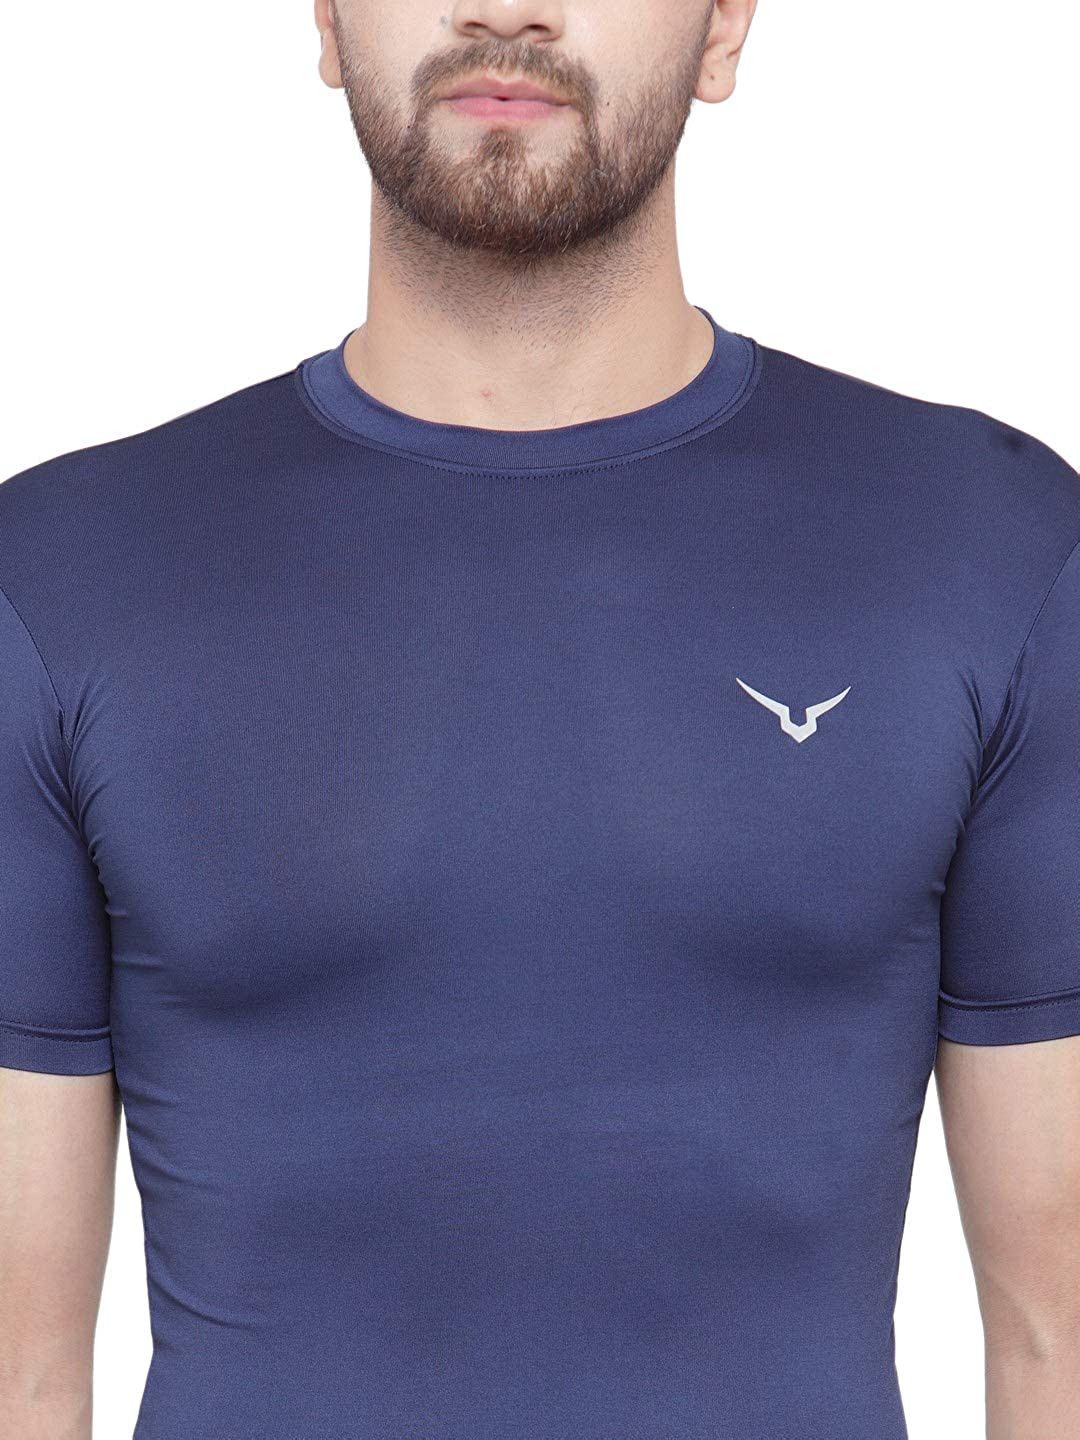 Invincible Men’s Compress Base Layer Short Sleeve T-Shirt